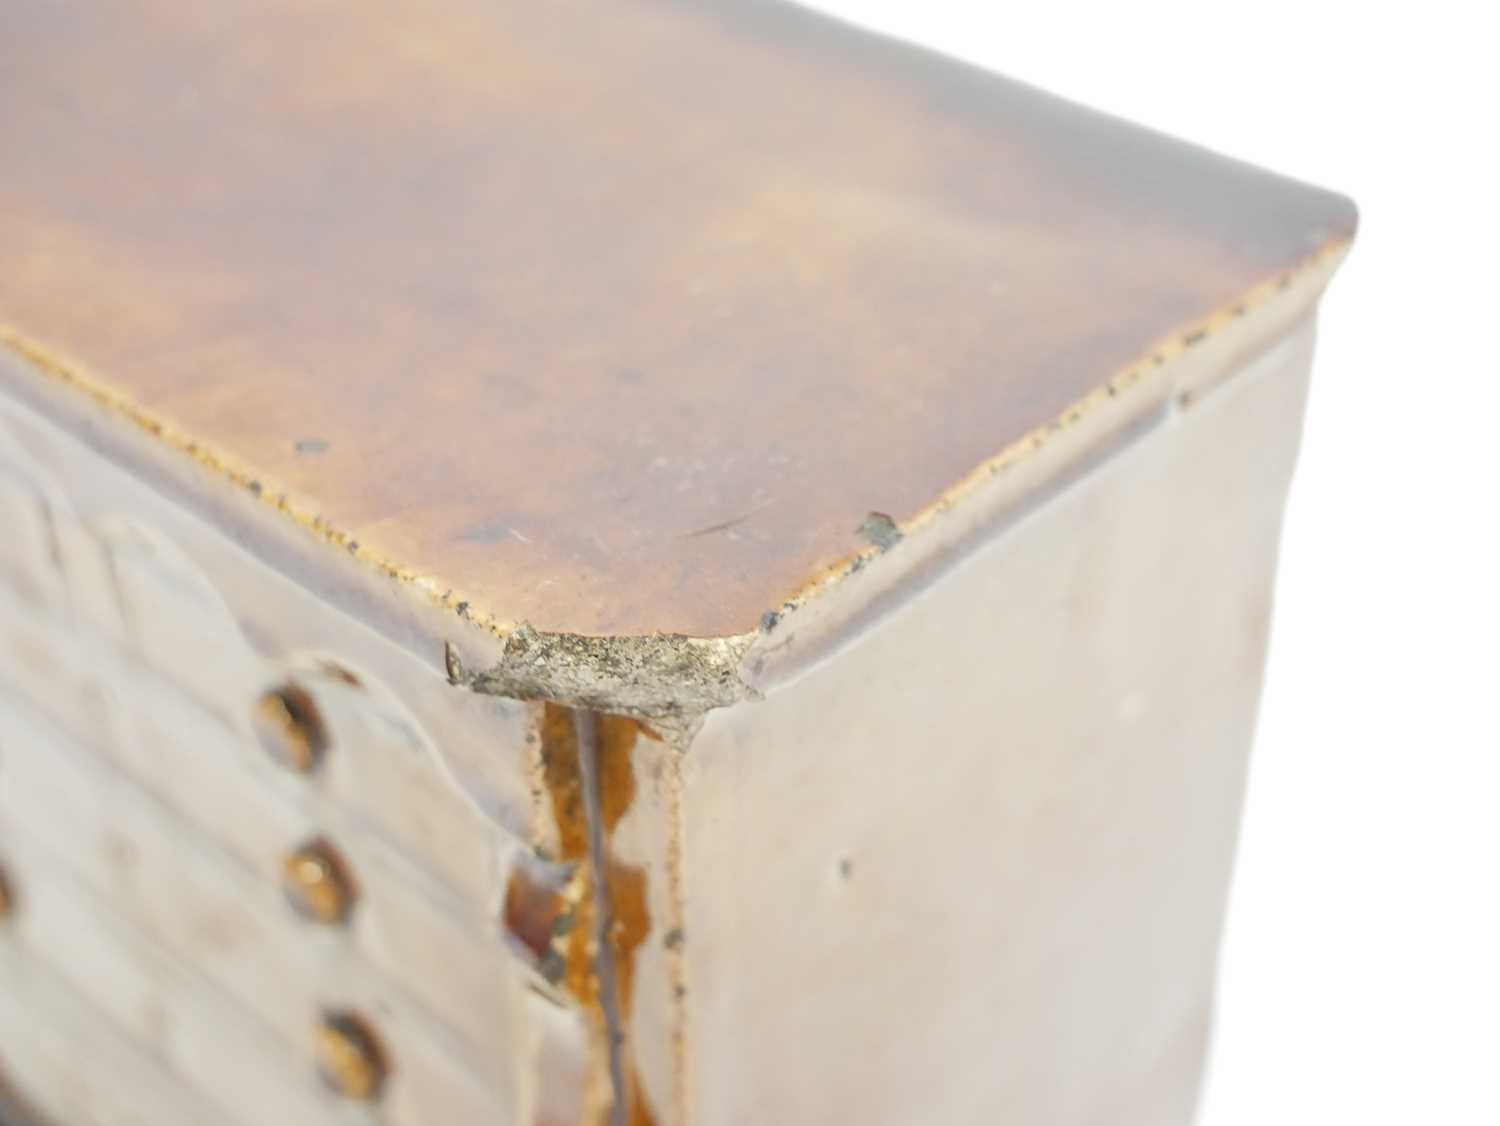 Treacle glaze chest of drawers money box - Image 4 of 6